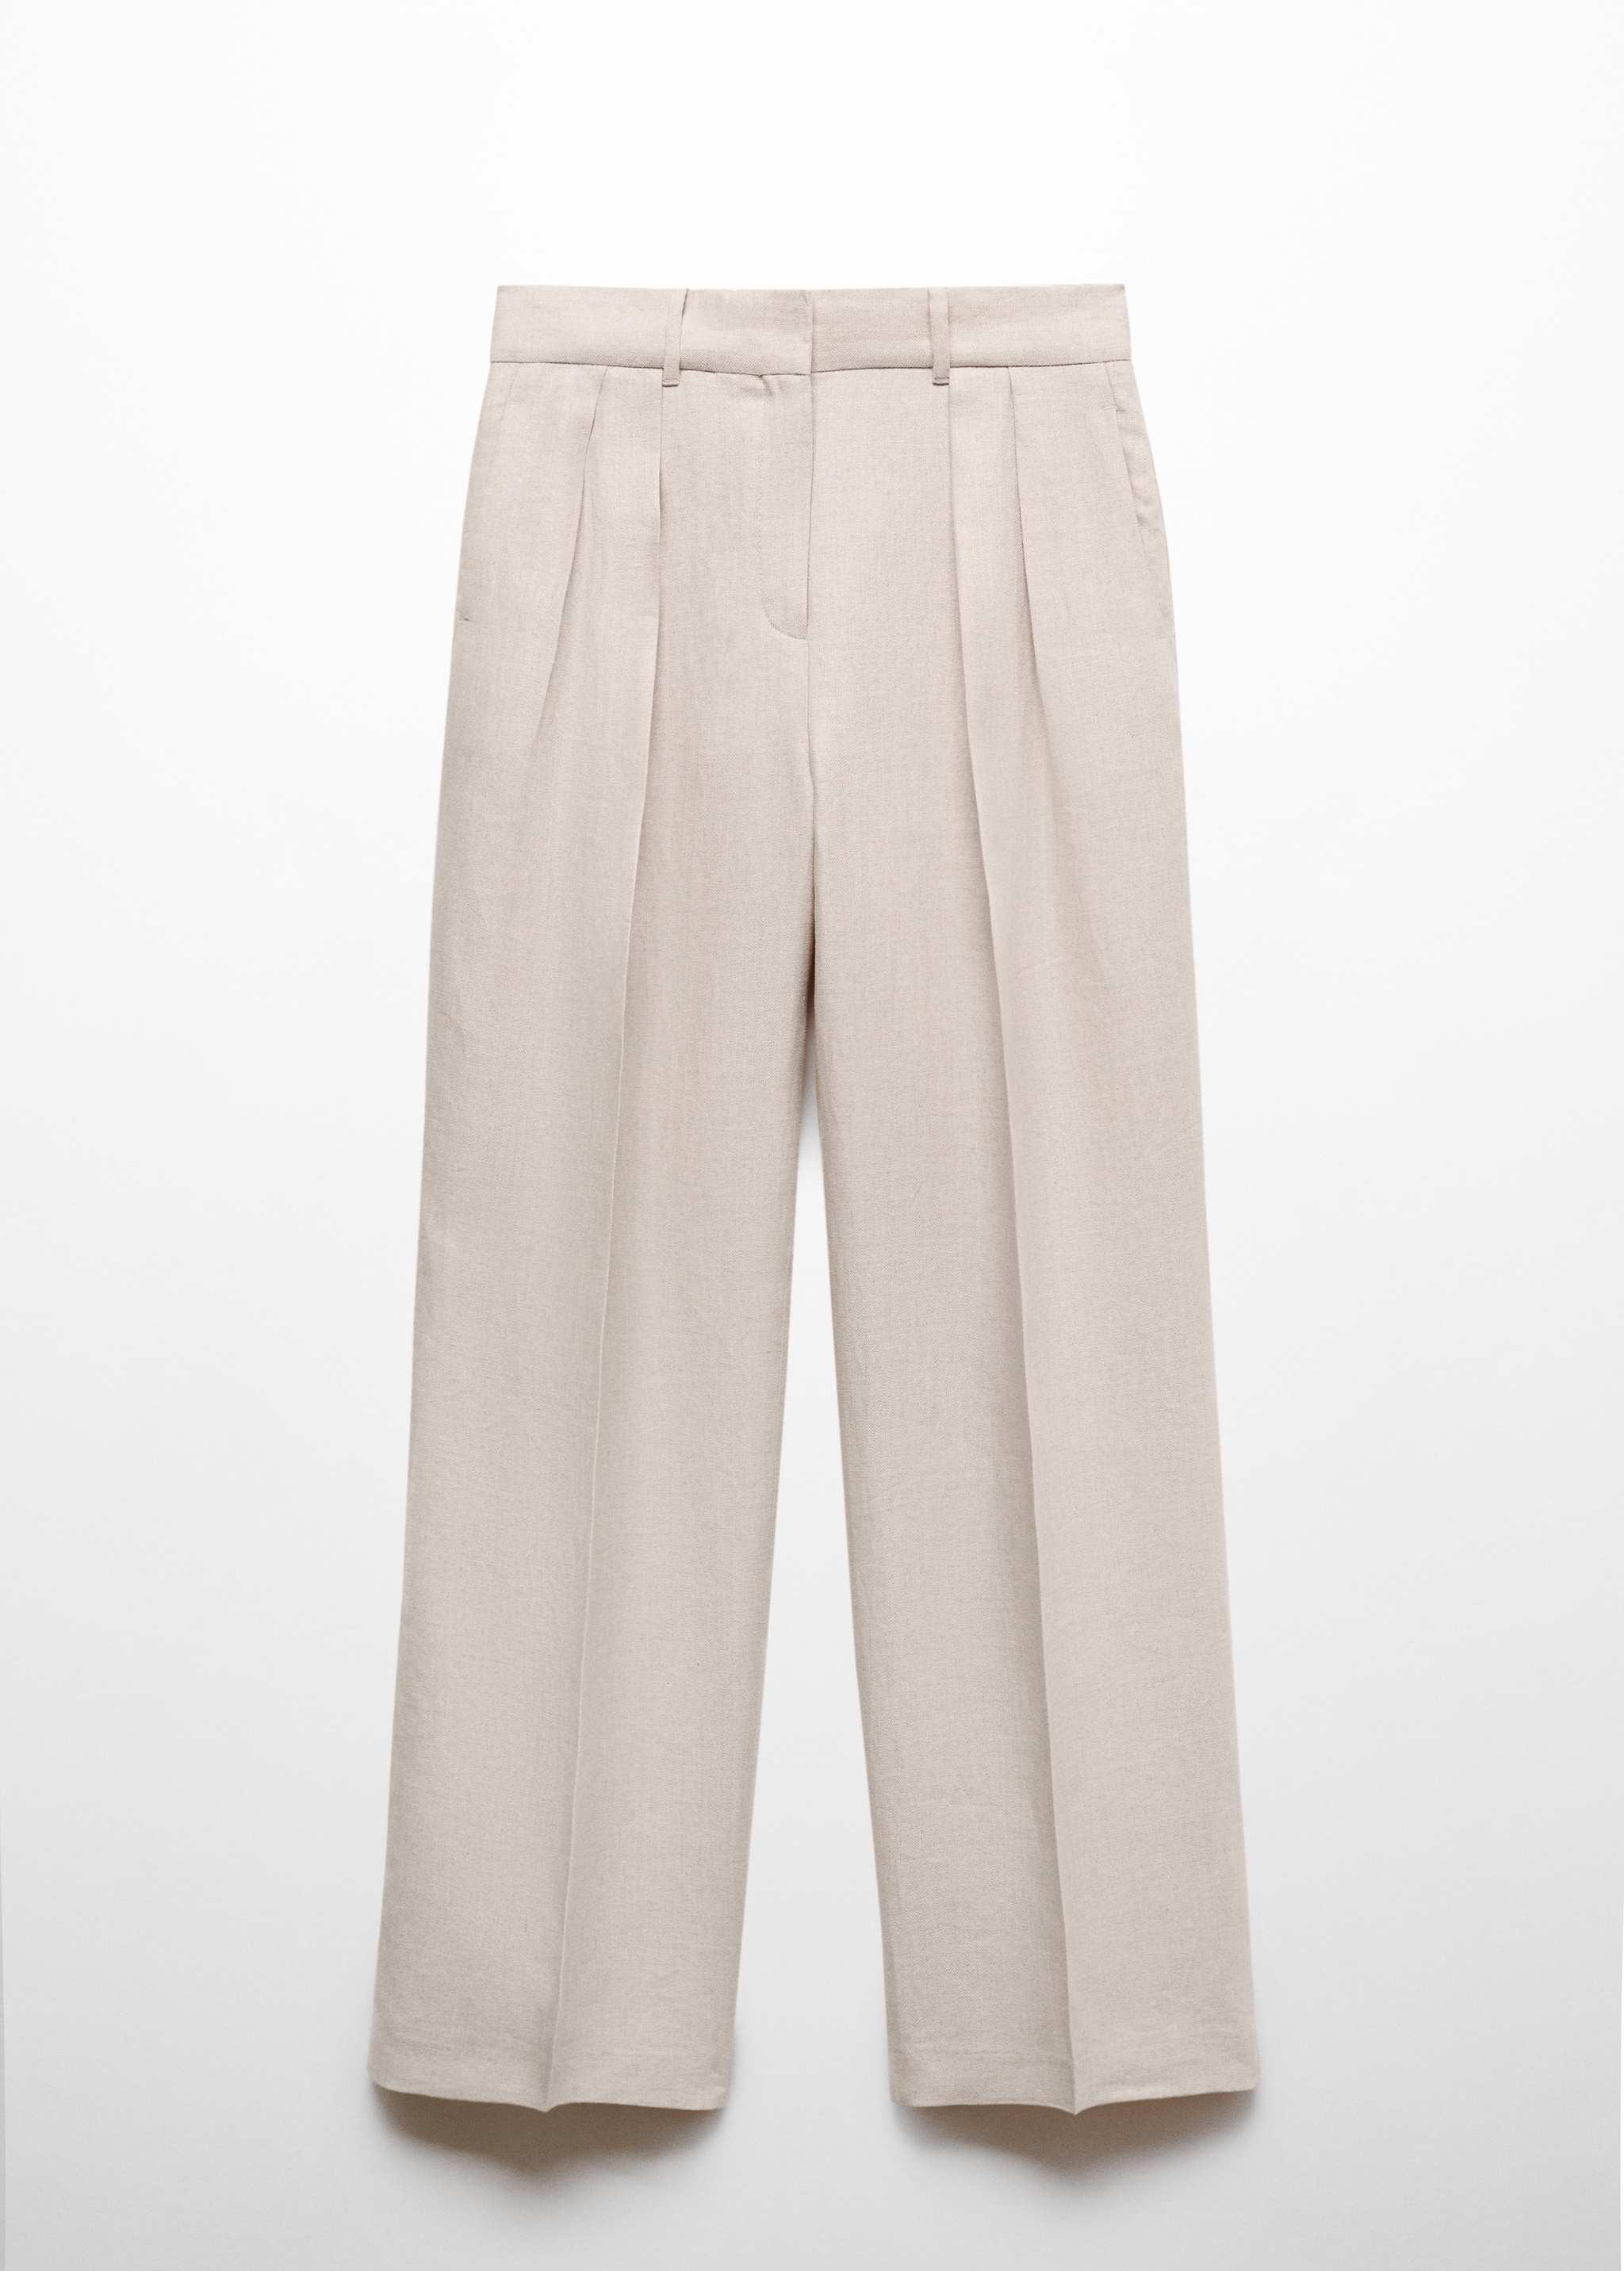 Pantalón pinzas 100% lino - Artículo sin modelo